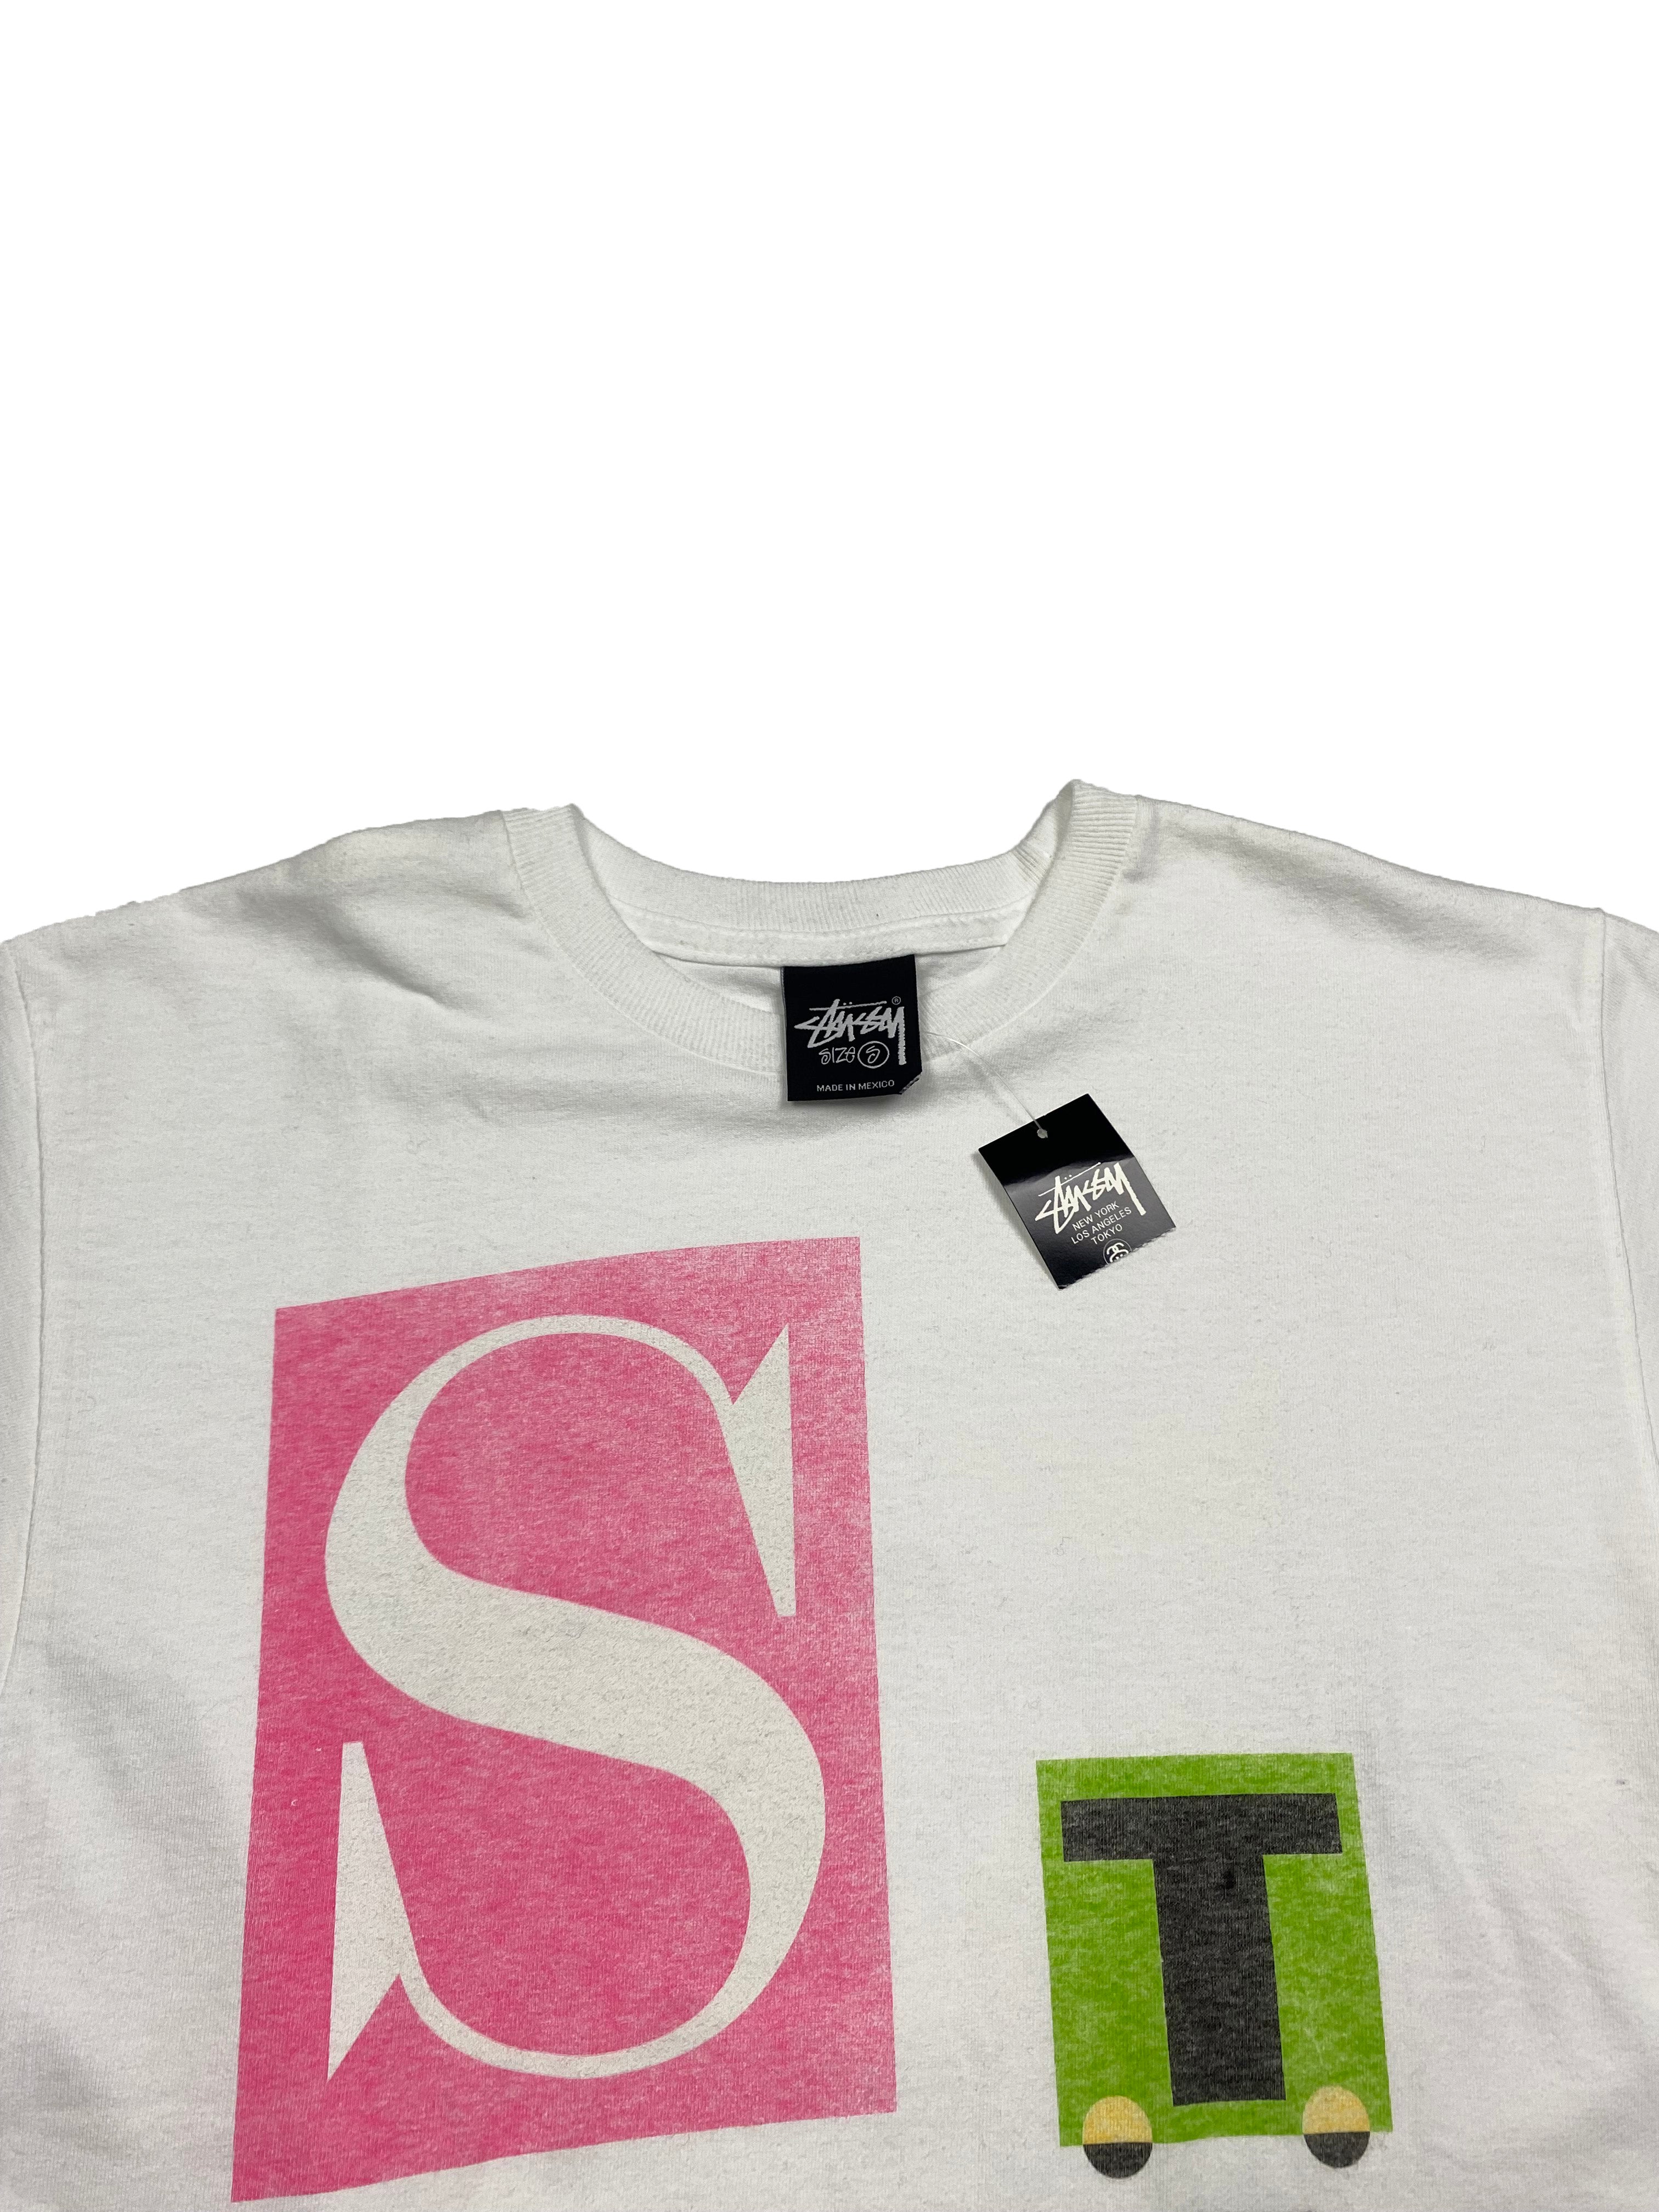 Stussy '80' Print T-shirt BNWT 00's